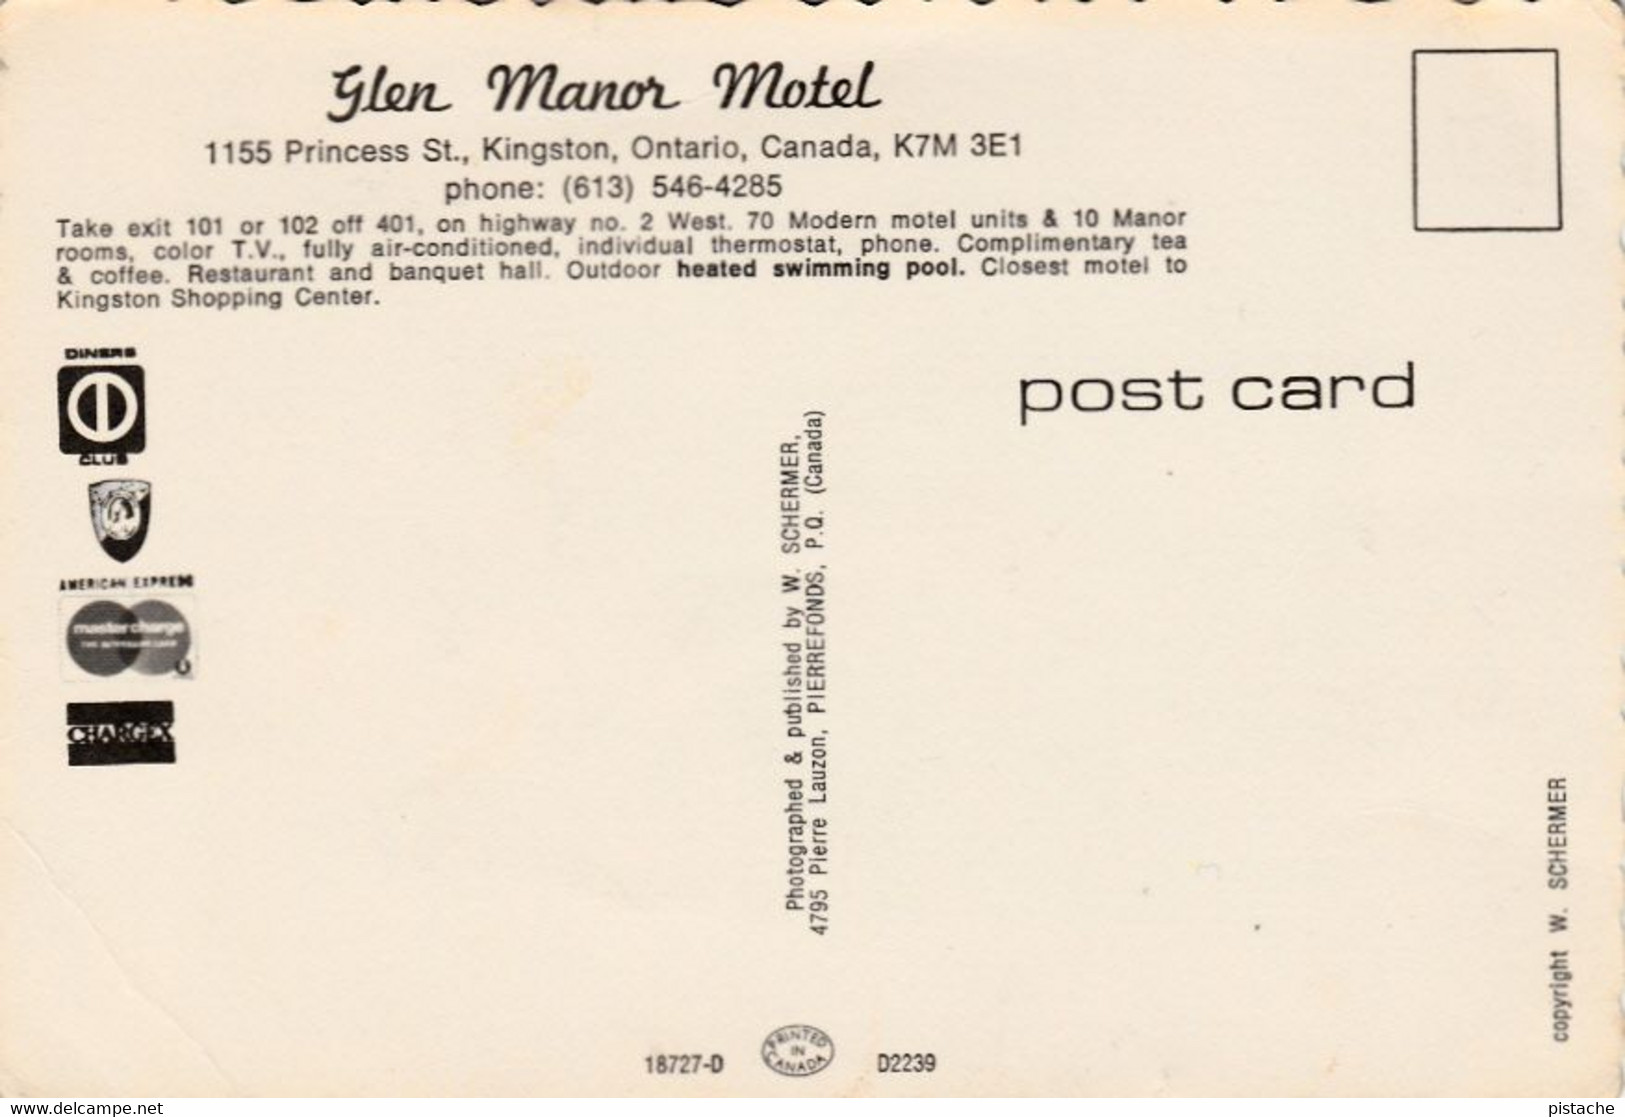 3642 – Kingston Ontario – Glen Manor Motel Restaurant – 1960-1965 Cars Voitures – Large 6 X 4 PC – VG Condition 2 Scans - Kingston